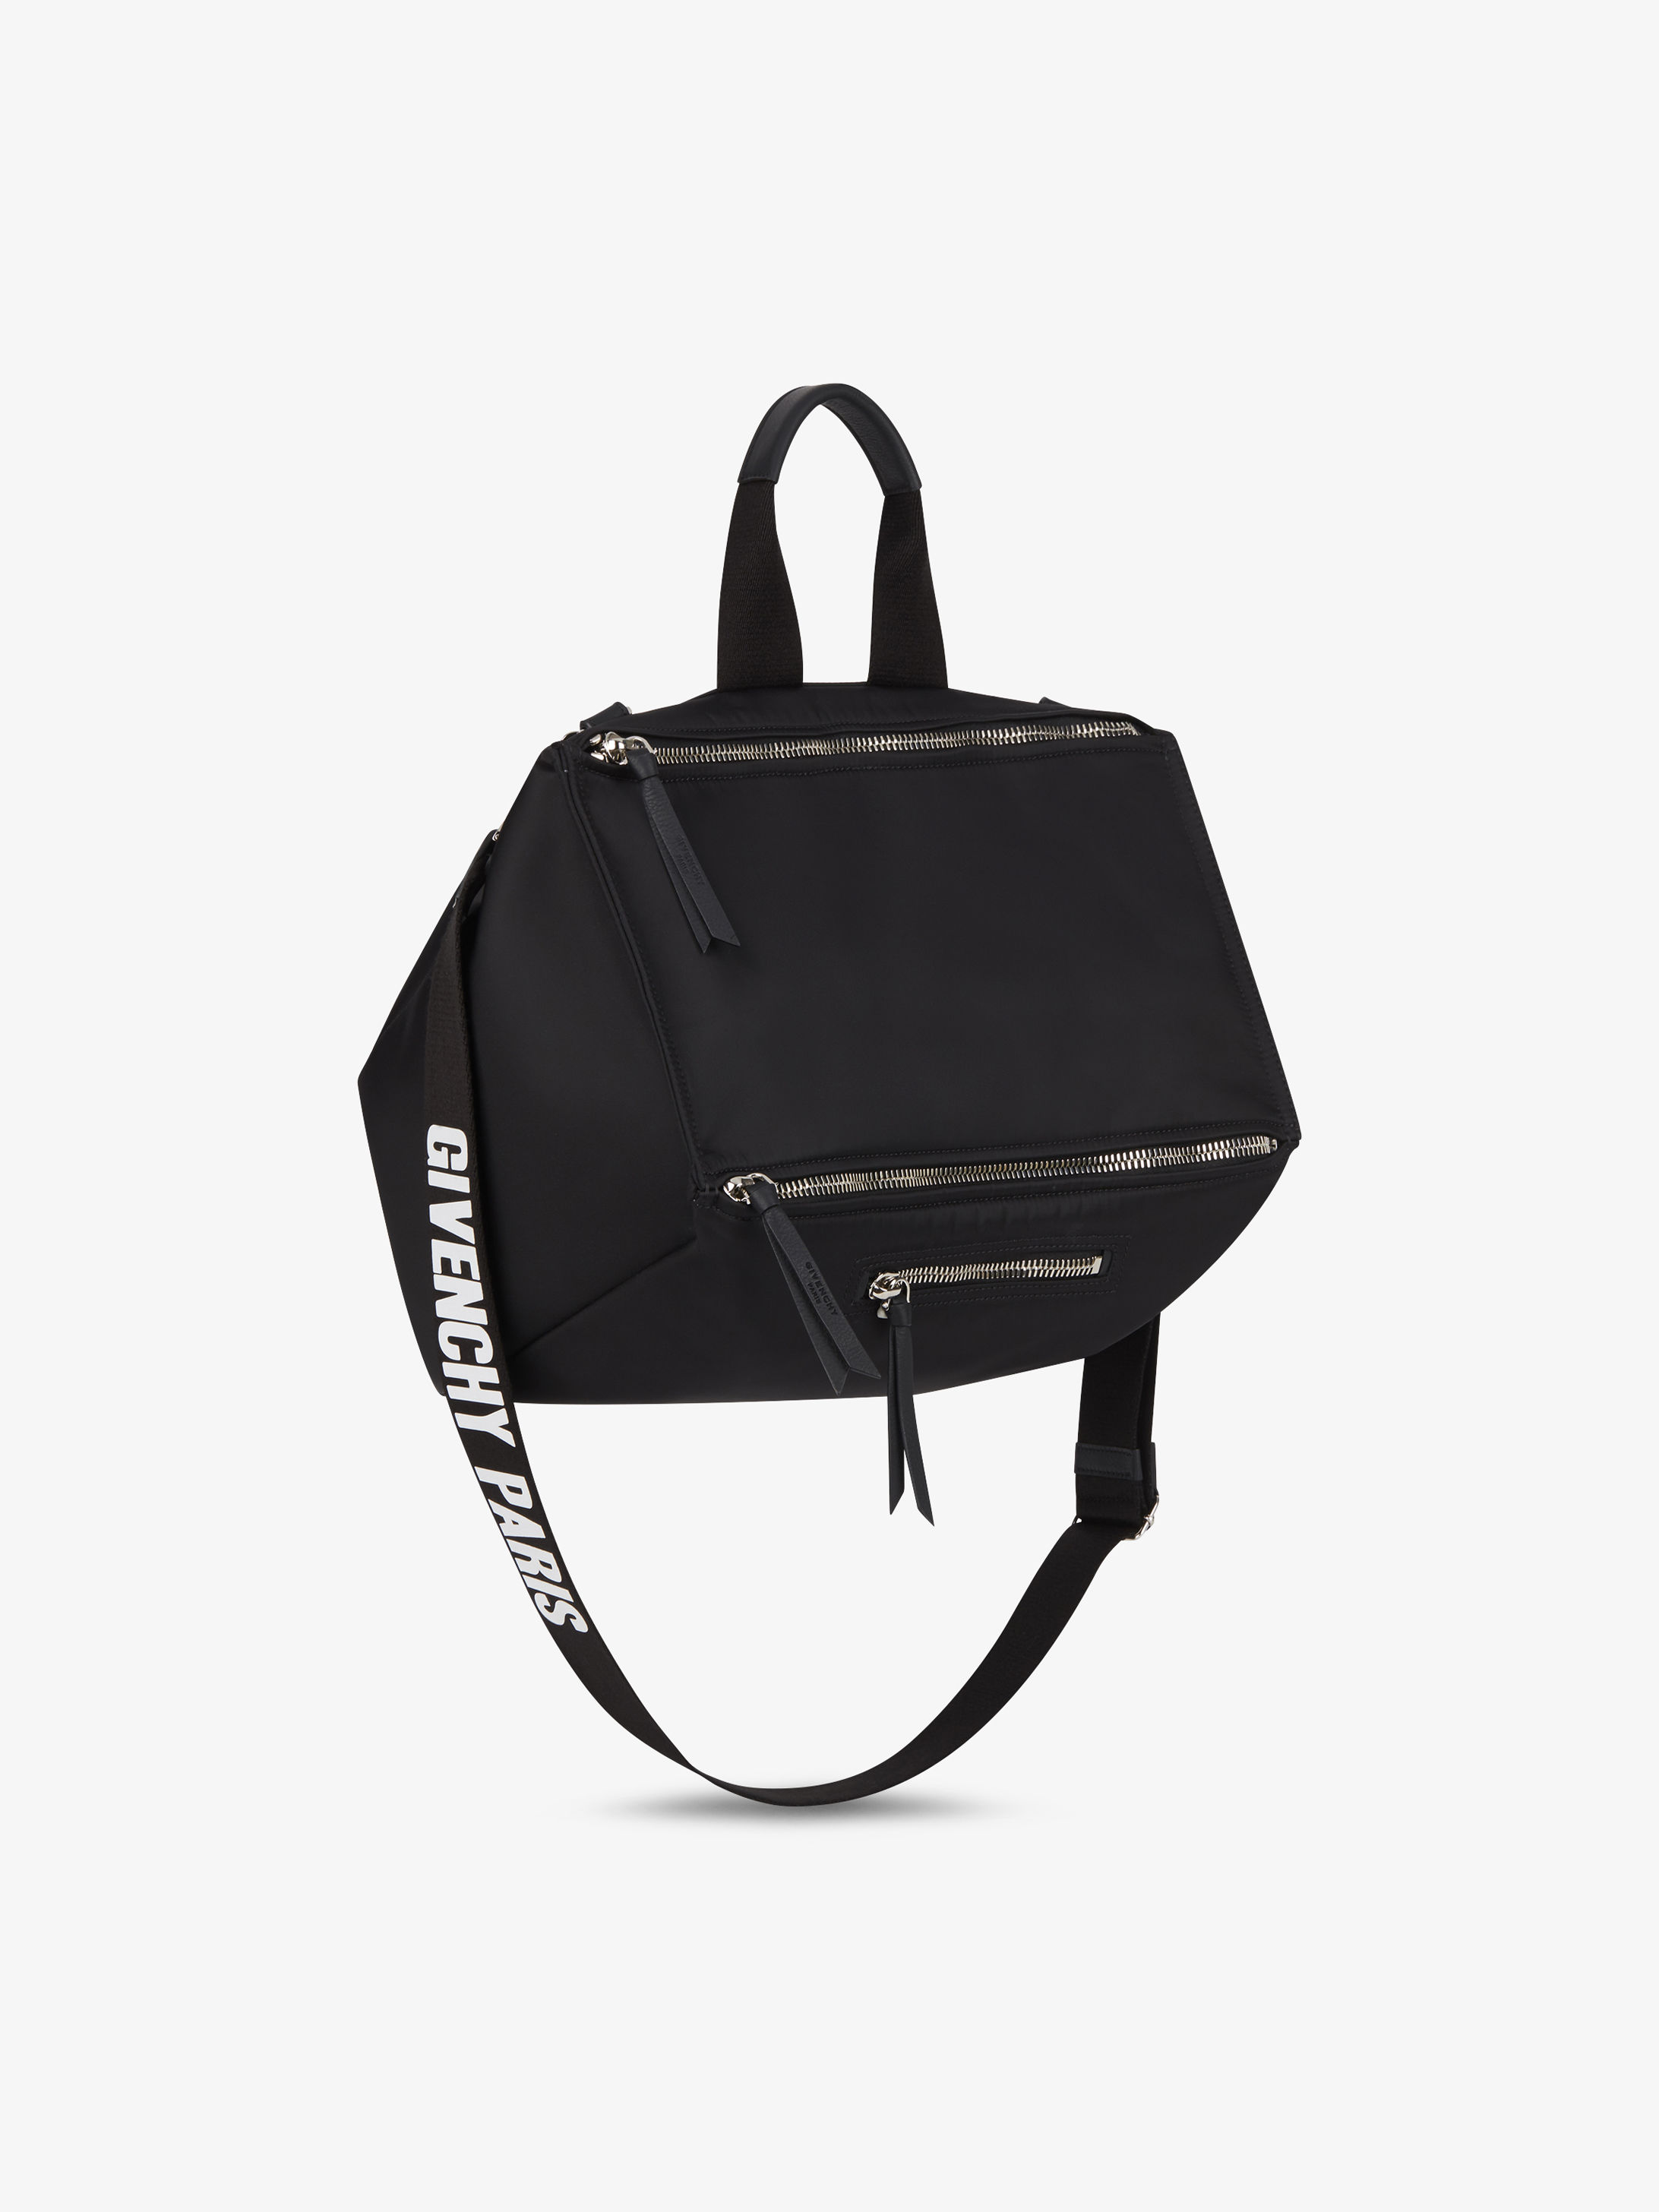 Givenchy Paris - Pandora Messenger Bag weekender bags